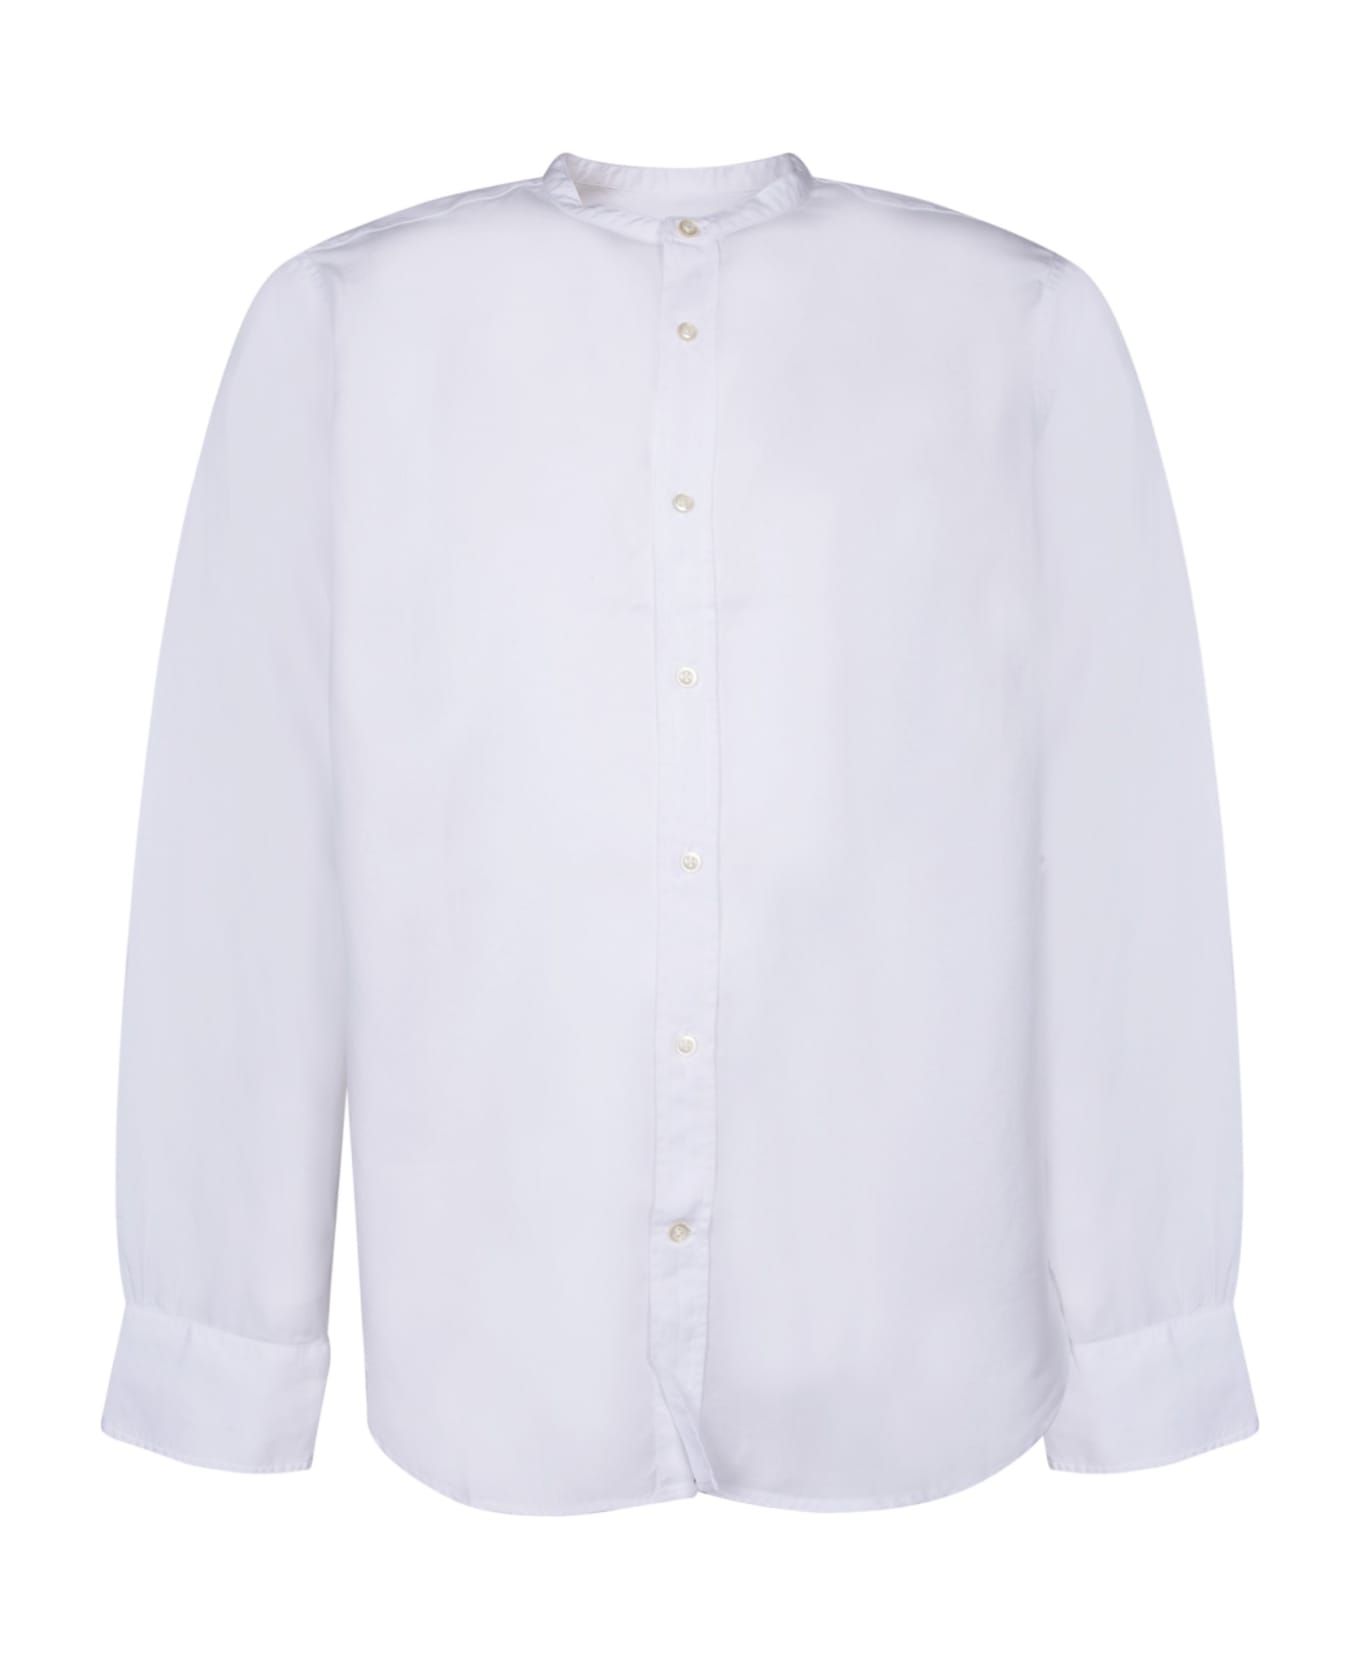 Officine Générale Korean Collar White Shirt - White シャツ